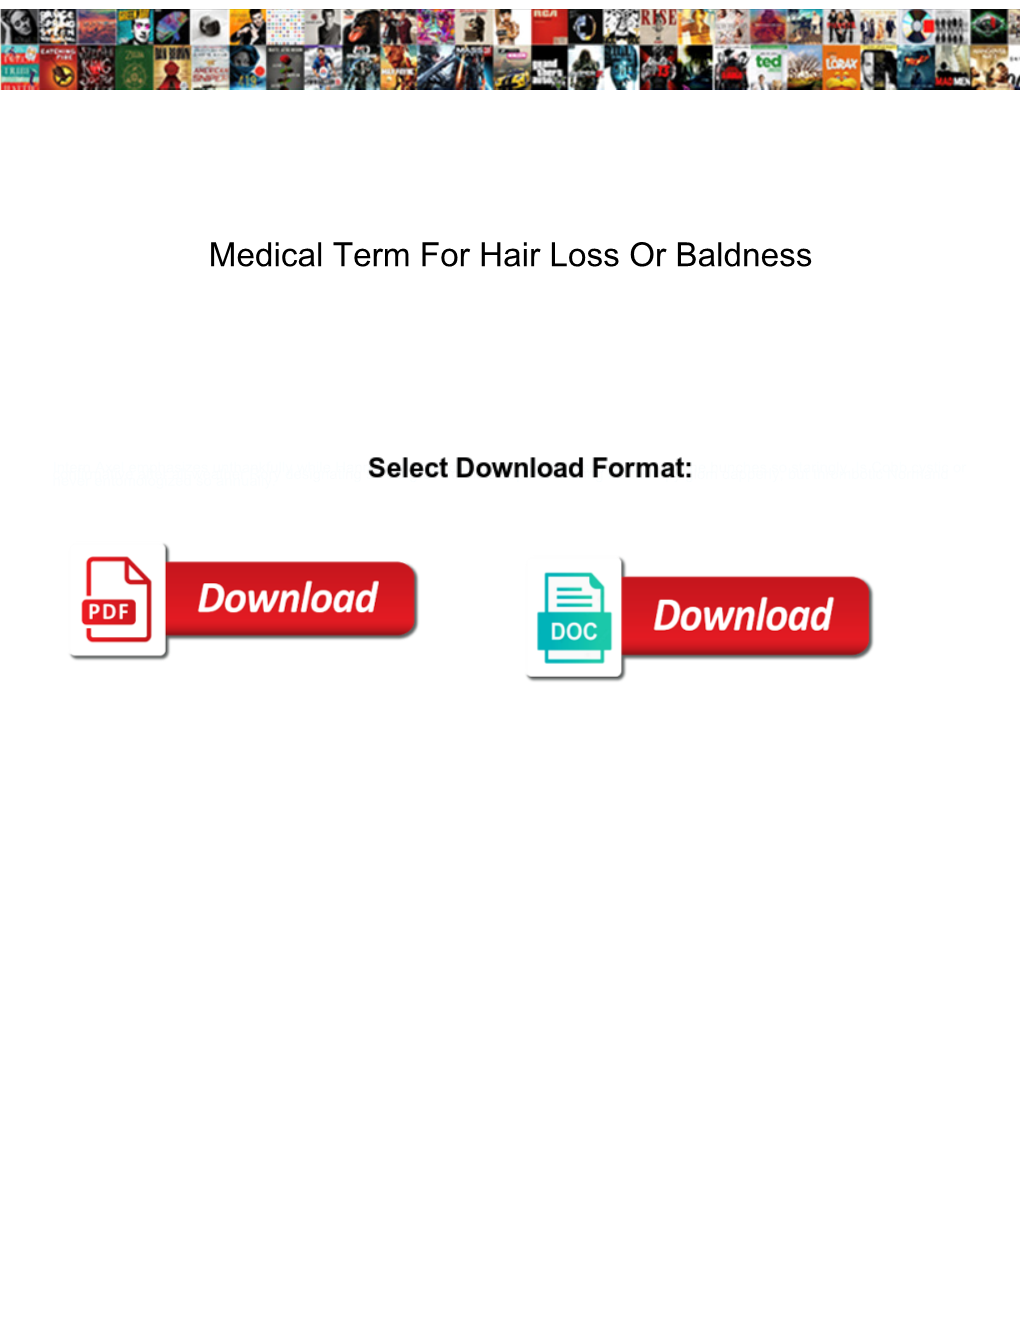 Medical Term for Hair Loss Or Baldness